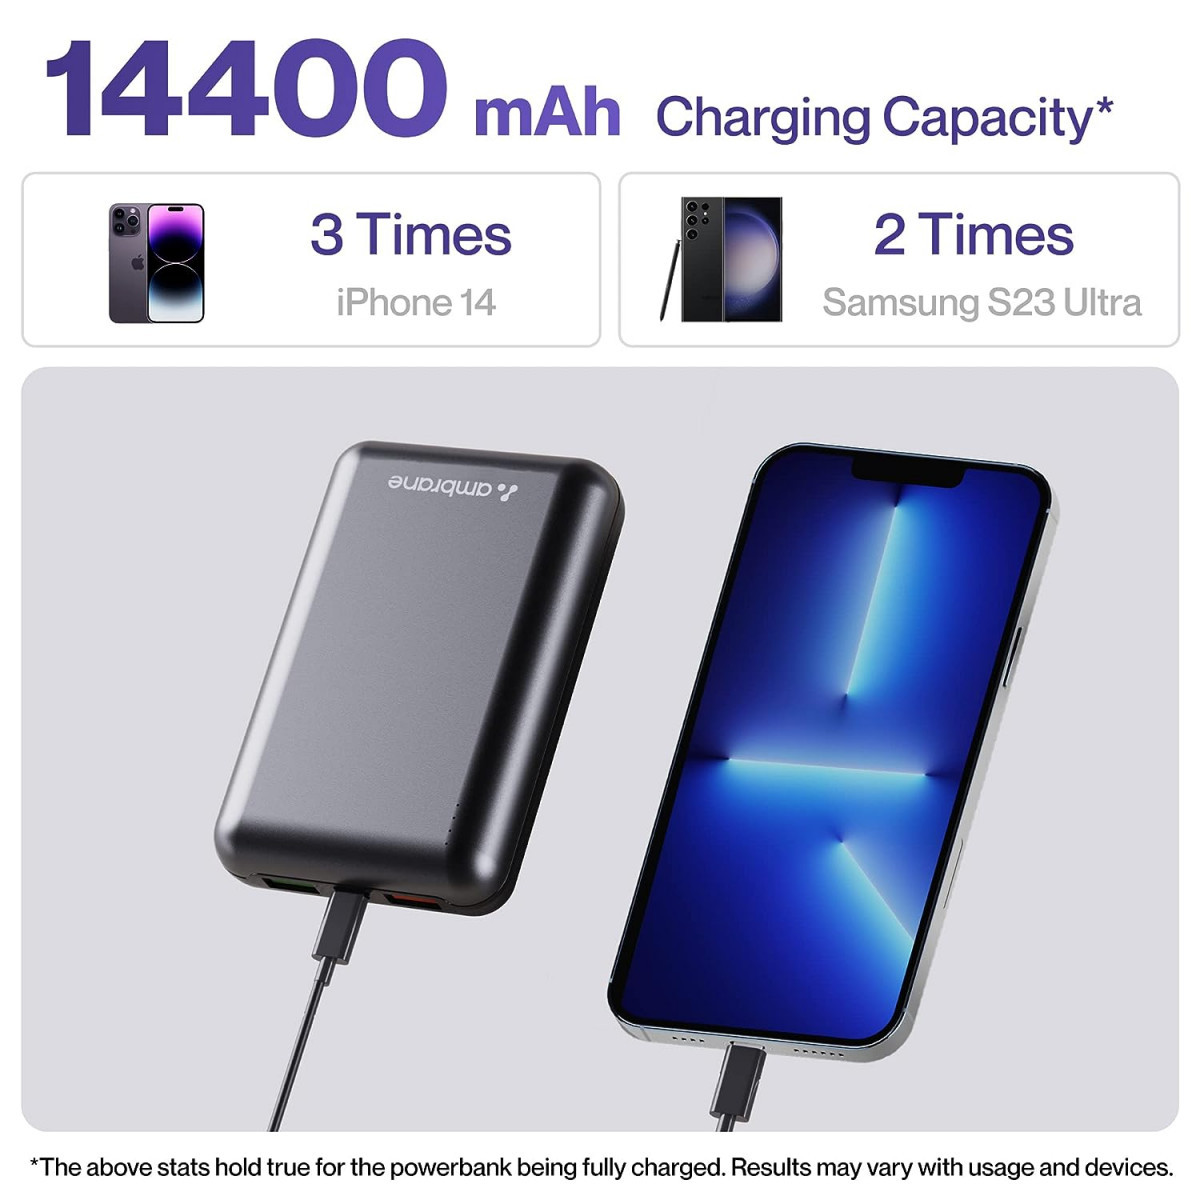 Ambrane 60W Fast Charging Powerbank for MacBook Type C Laptop  Mobile Charging Lithium Ion Battery Metallic Body